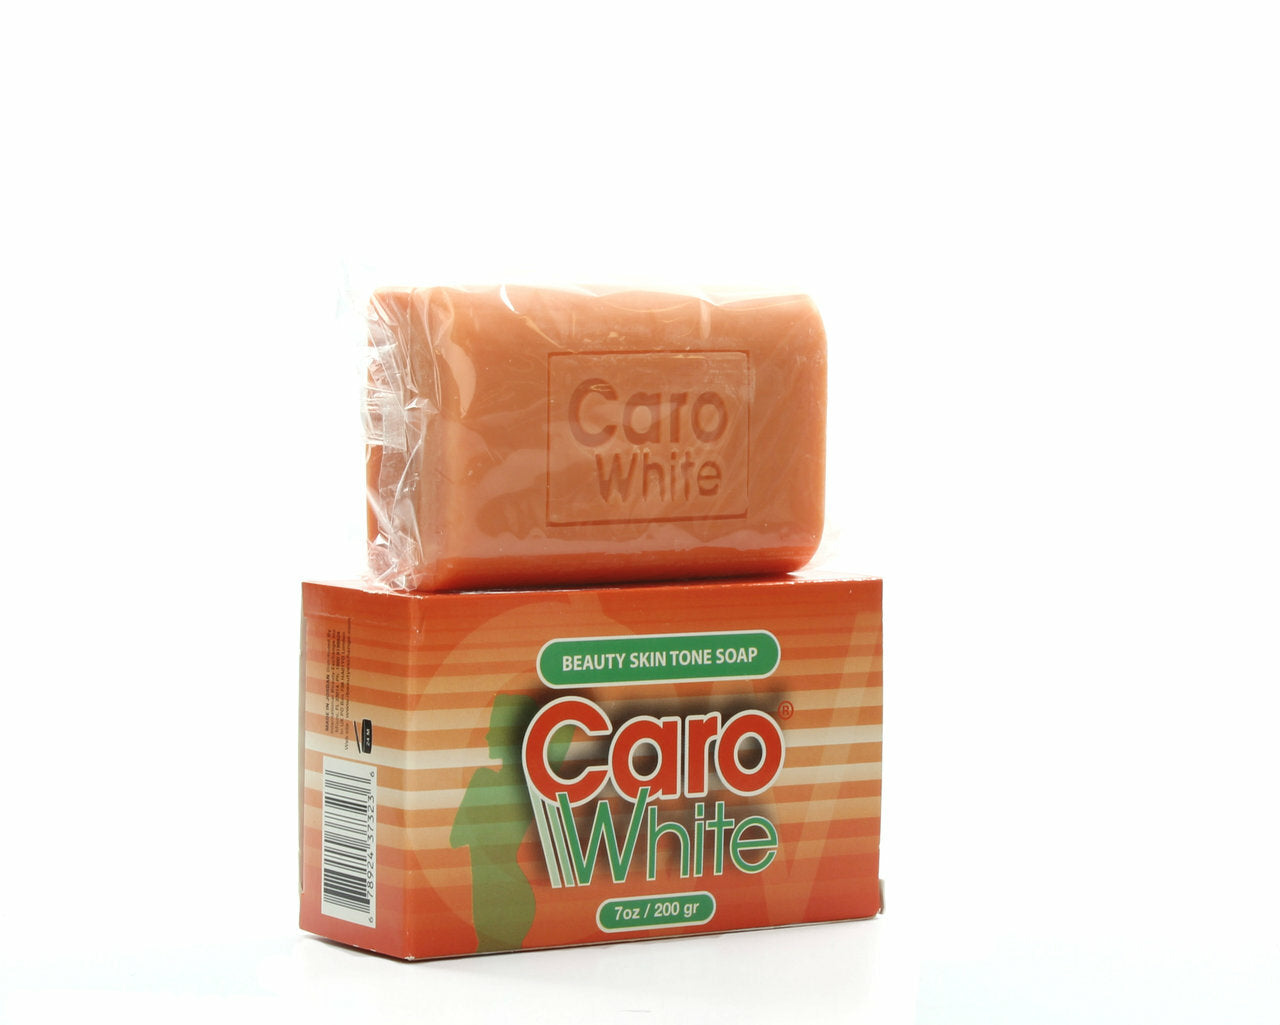 MA Caro White Brightening Cream Tube 60 ml. - Aheco Webshop